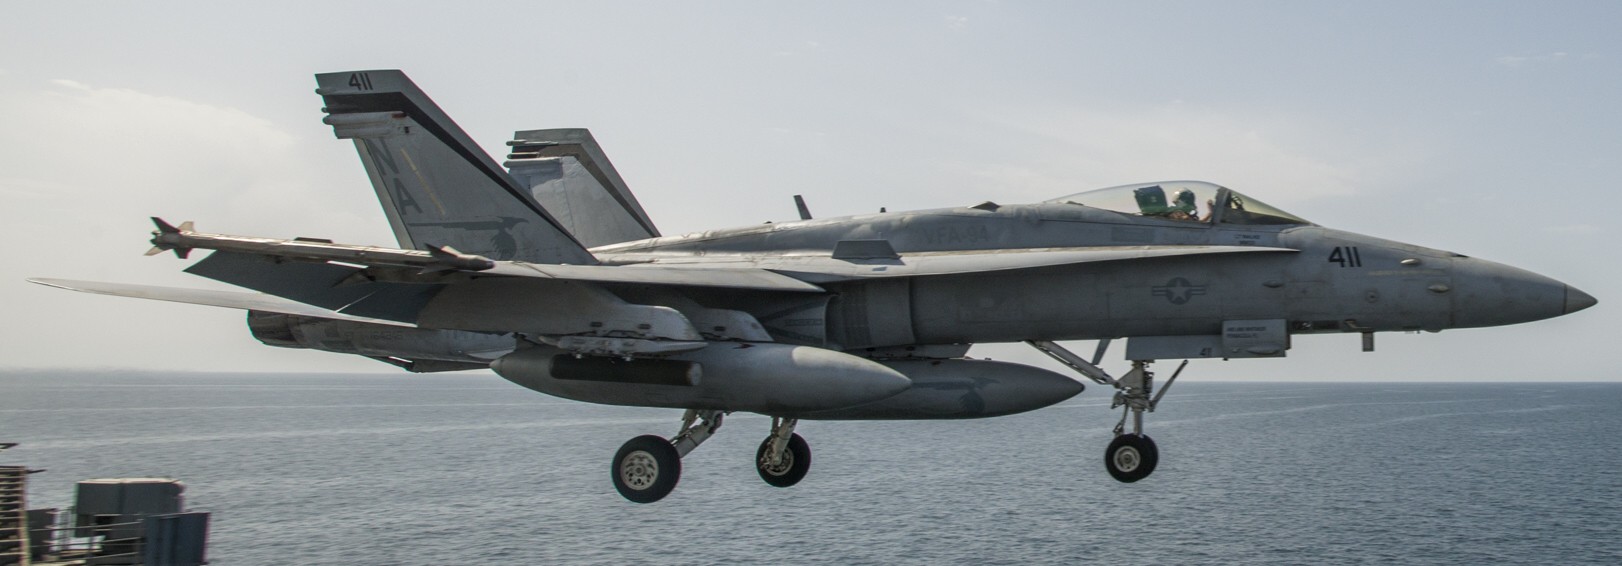 vfa-94 mighty shrikes strike fighter squadron f/a-18c hornet cvw-17 uss carl vinson cvn-70 us navy 17